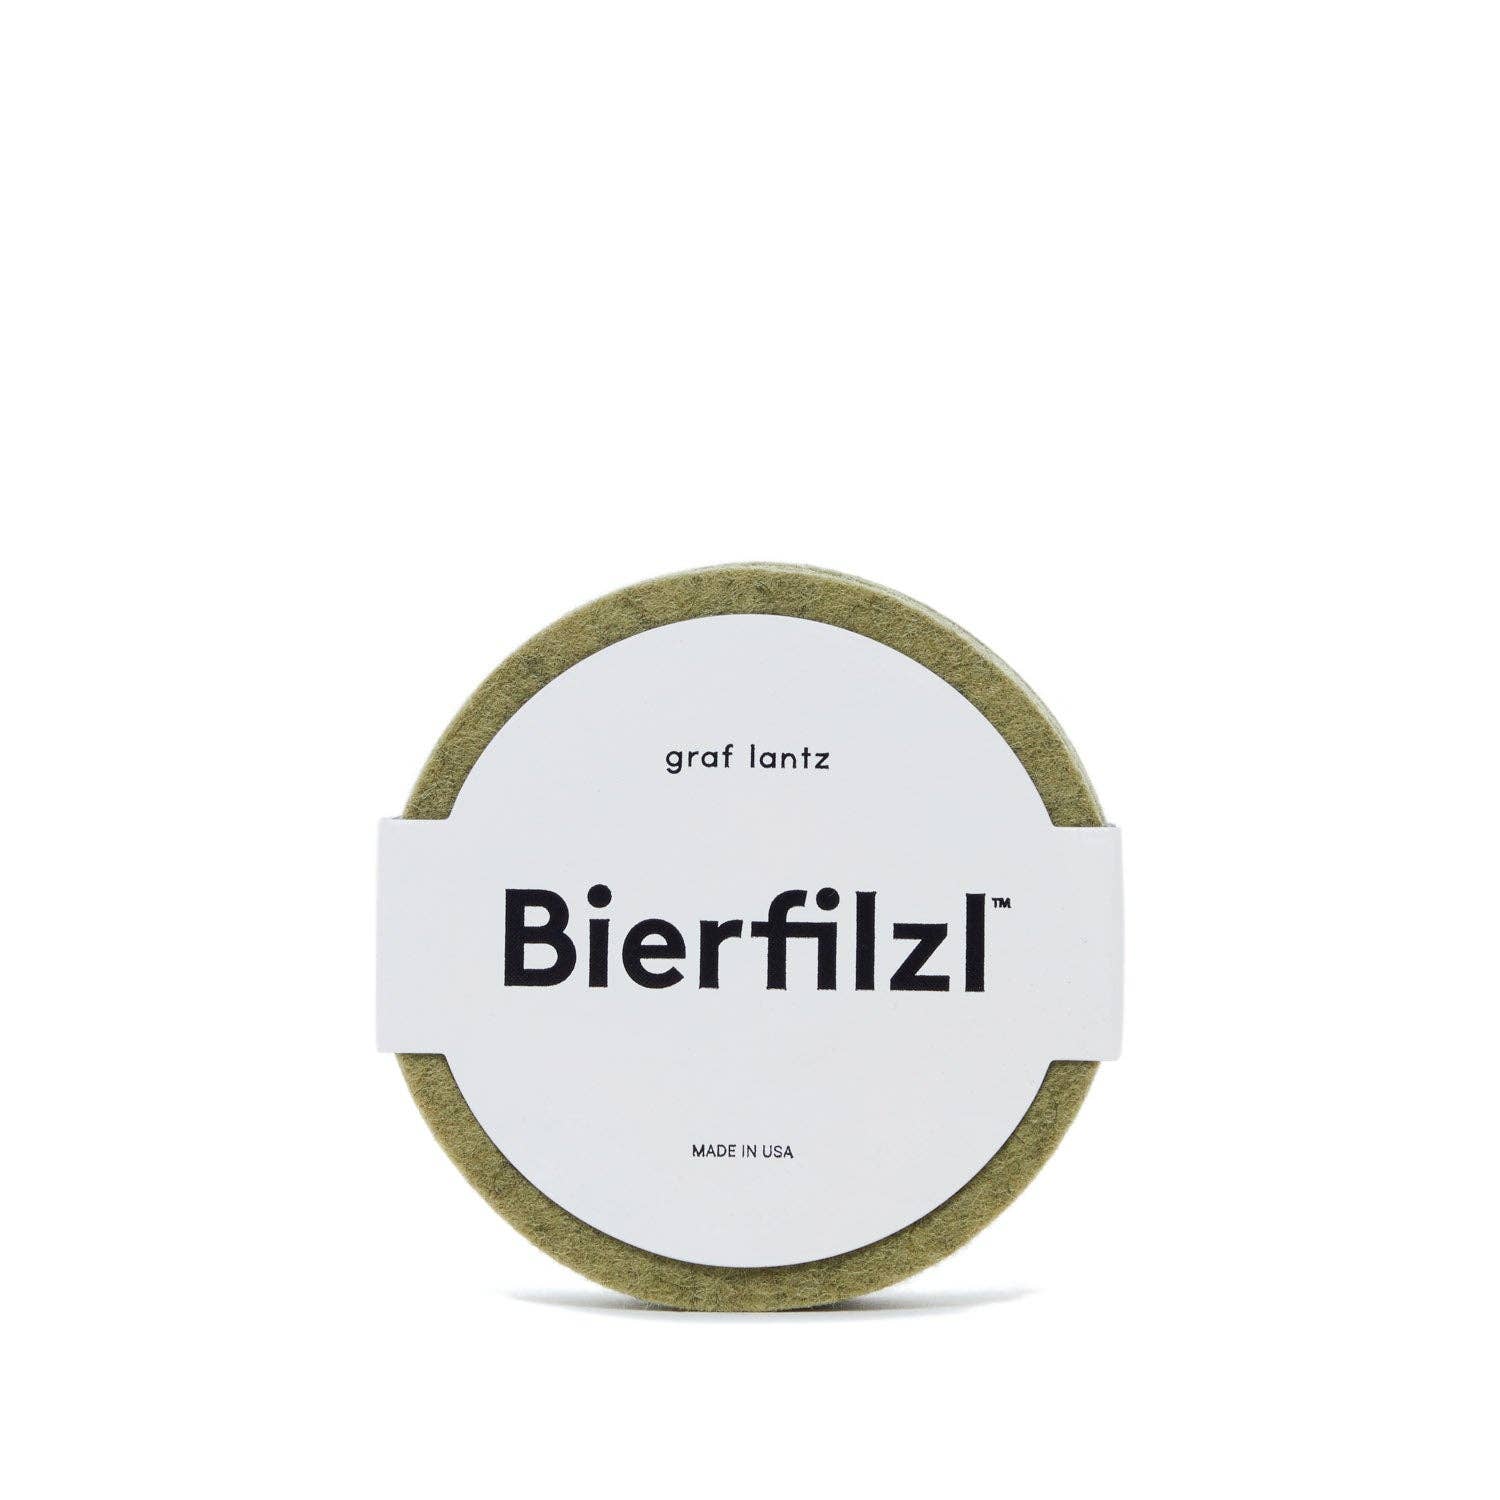 Bierfilzl Merino Wool Felt Round Coaster 4 Pack - Sage  Graf Lantz